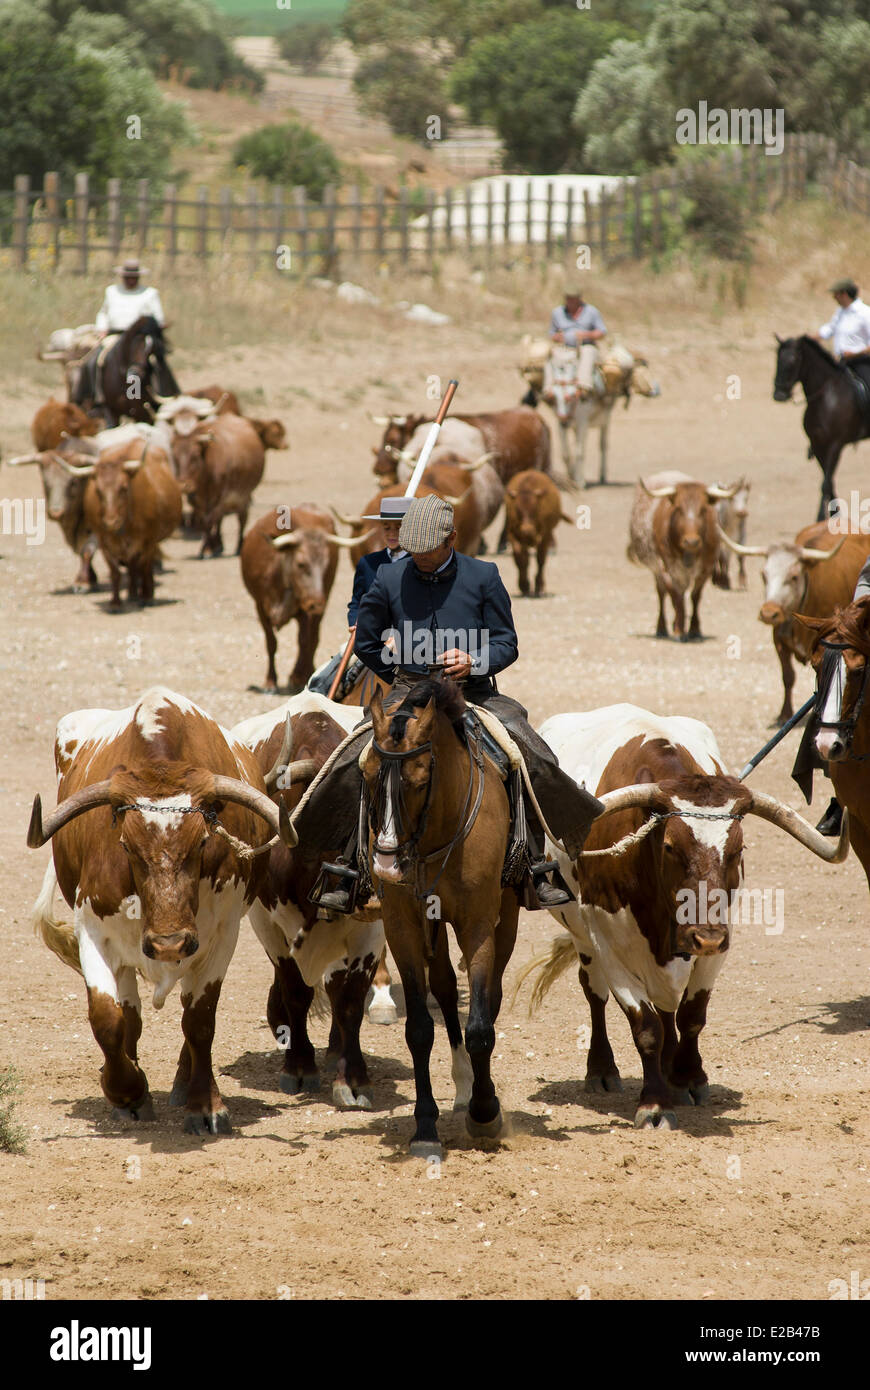 Spain, Andalucia, Vejer de la Frontera, Ganaderia, horse riders and beefs Stock Photo